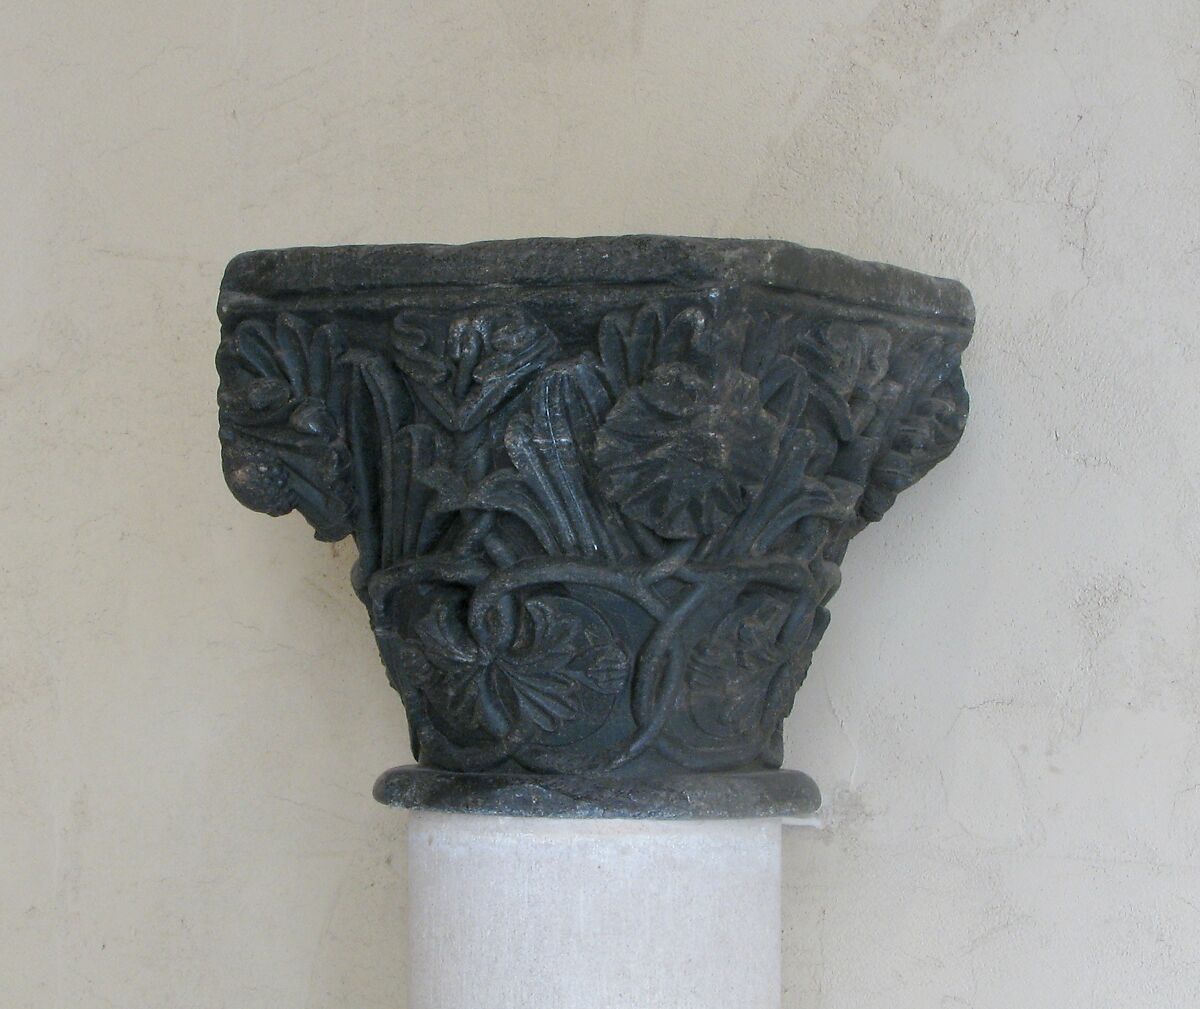 Foliate Capital, Black marble, French 